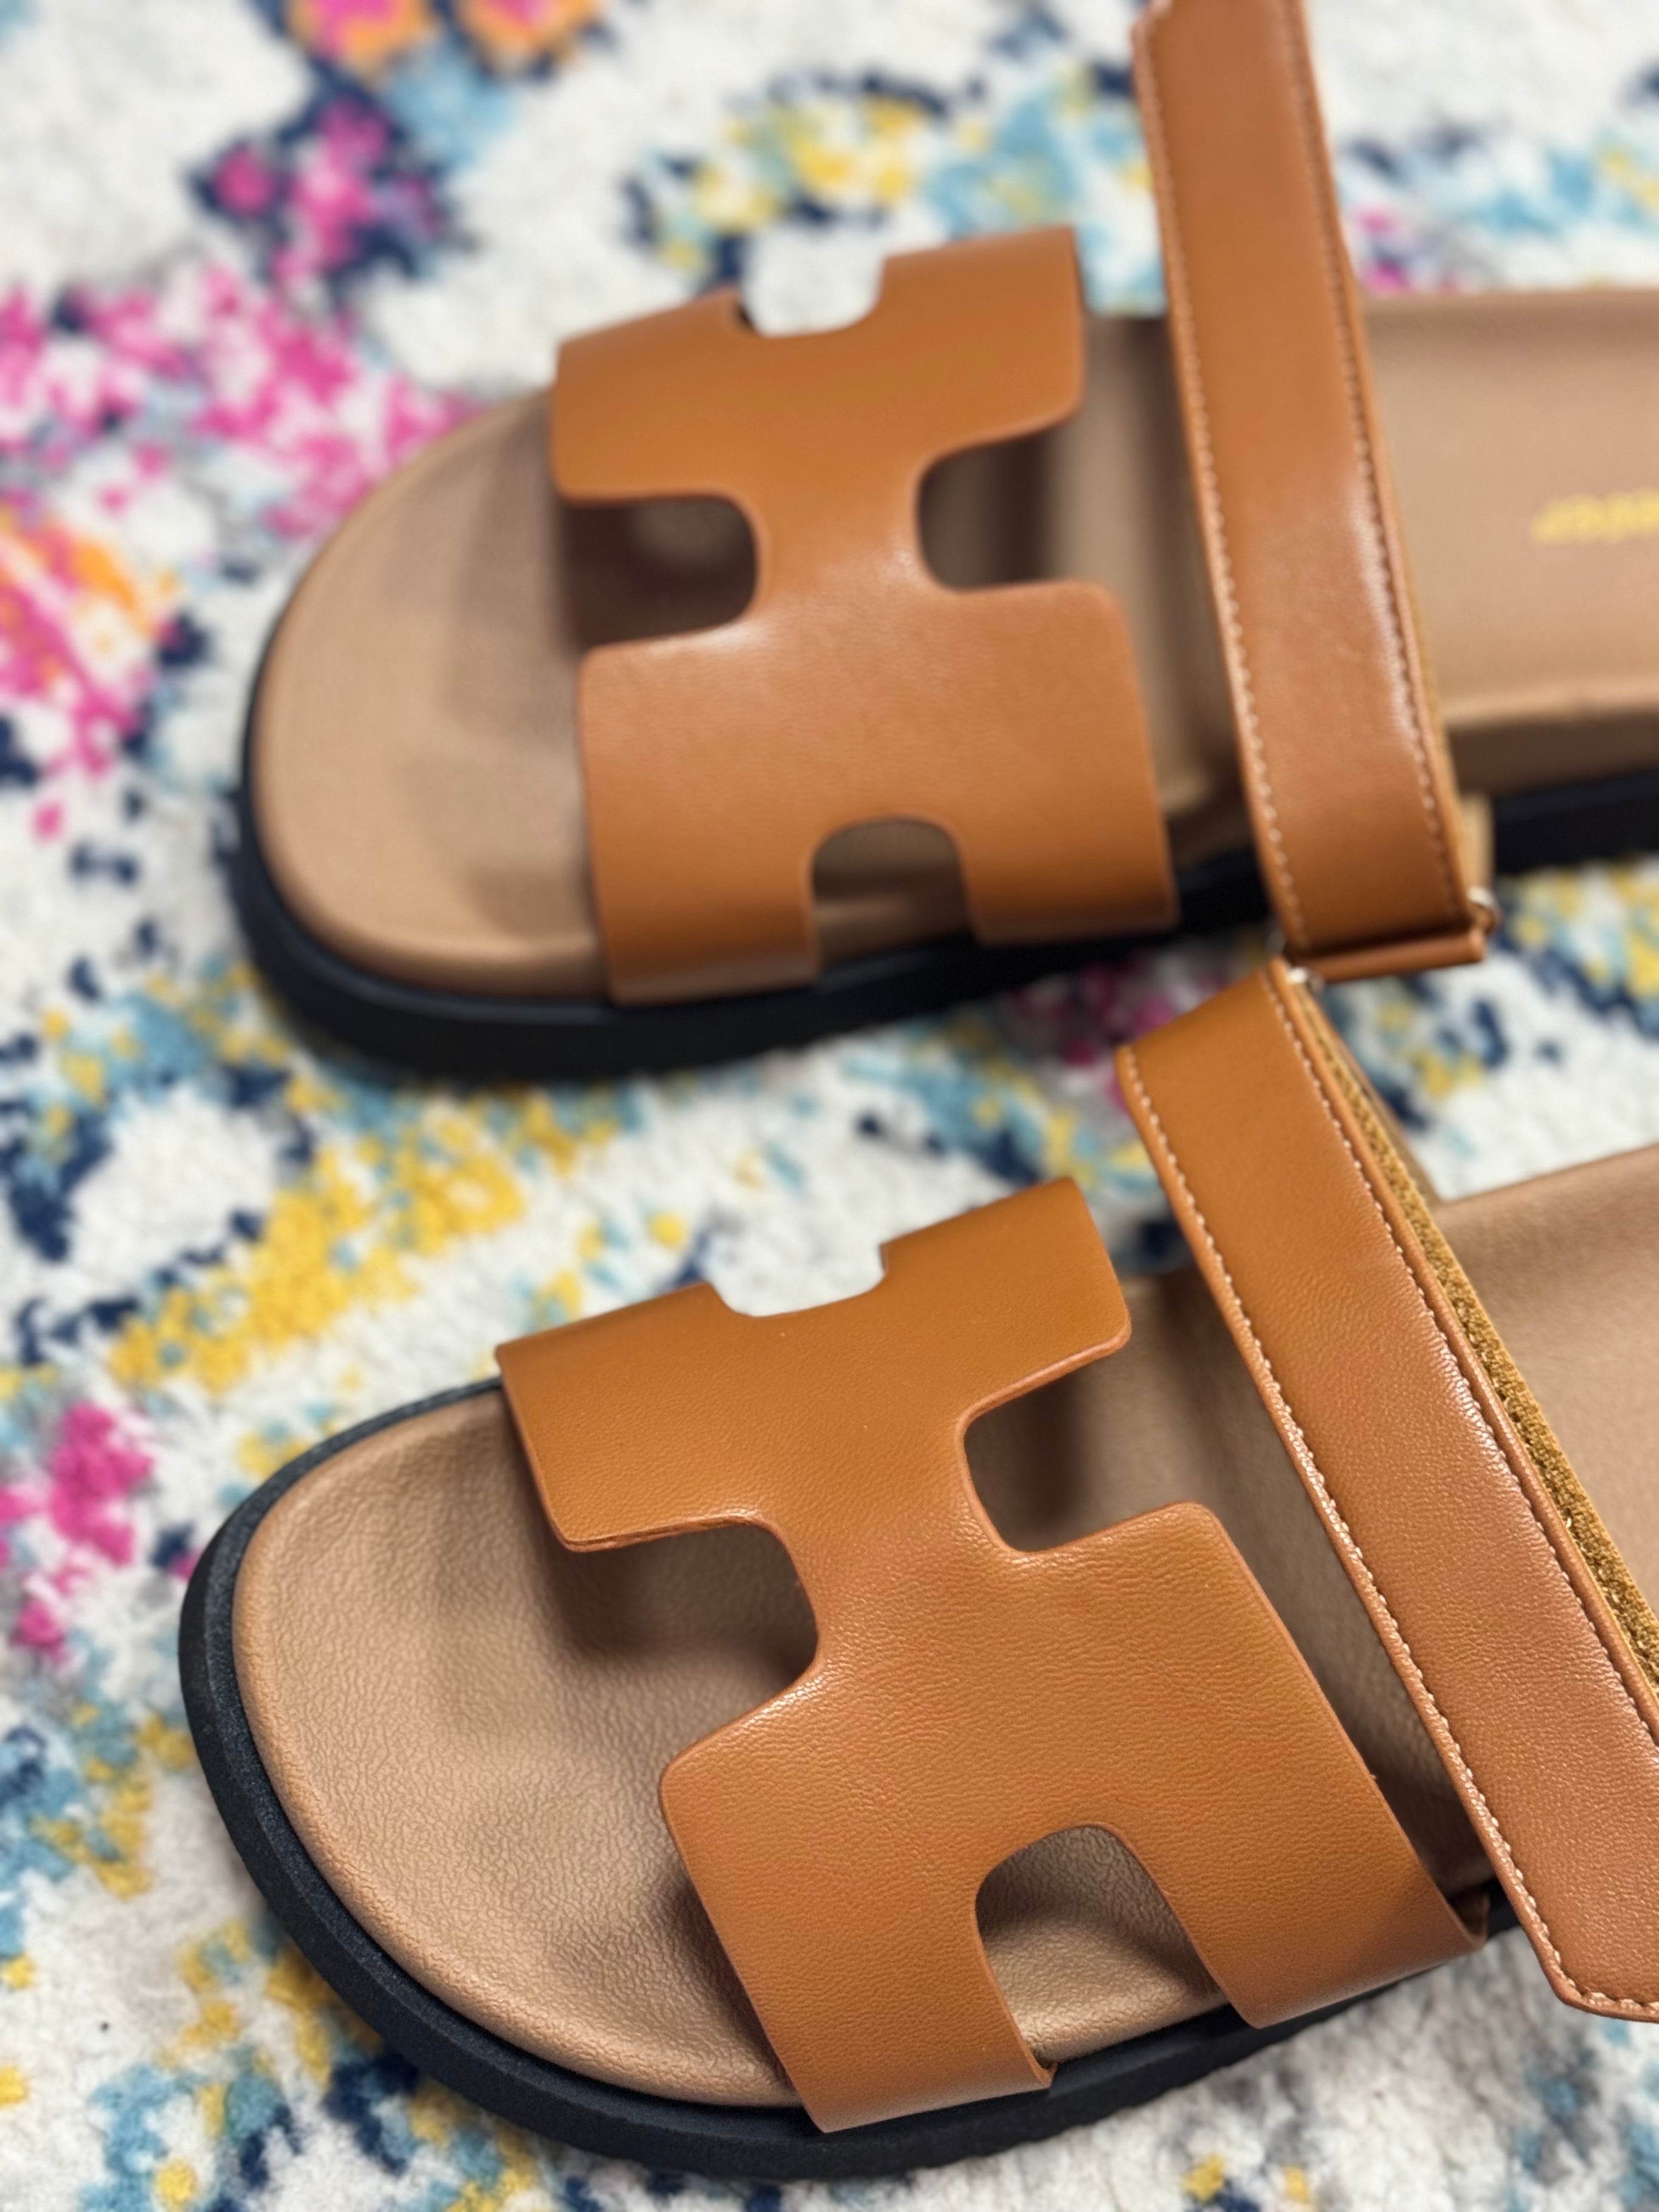 Brown H Style Adjustable Sandals